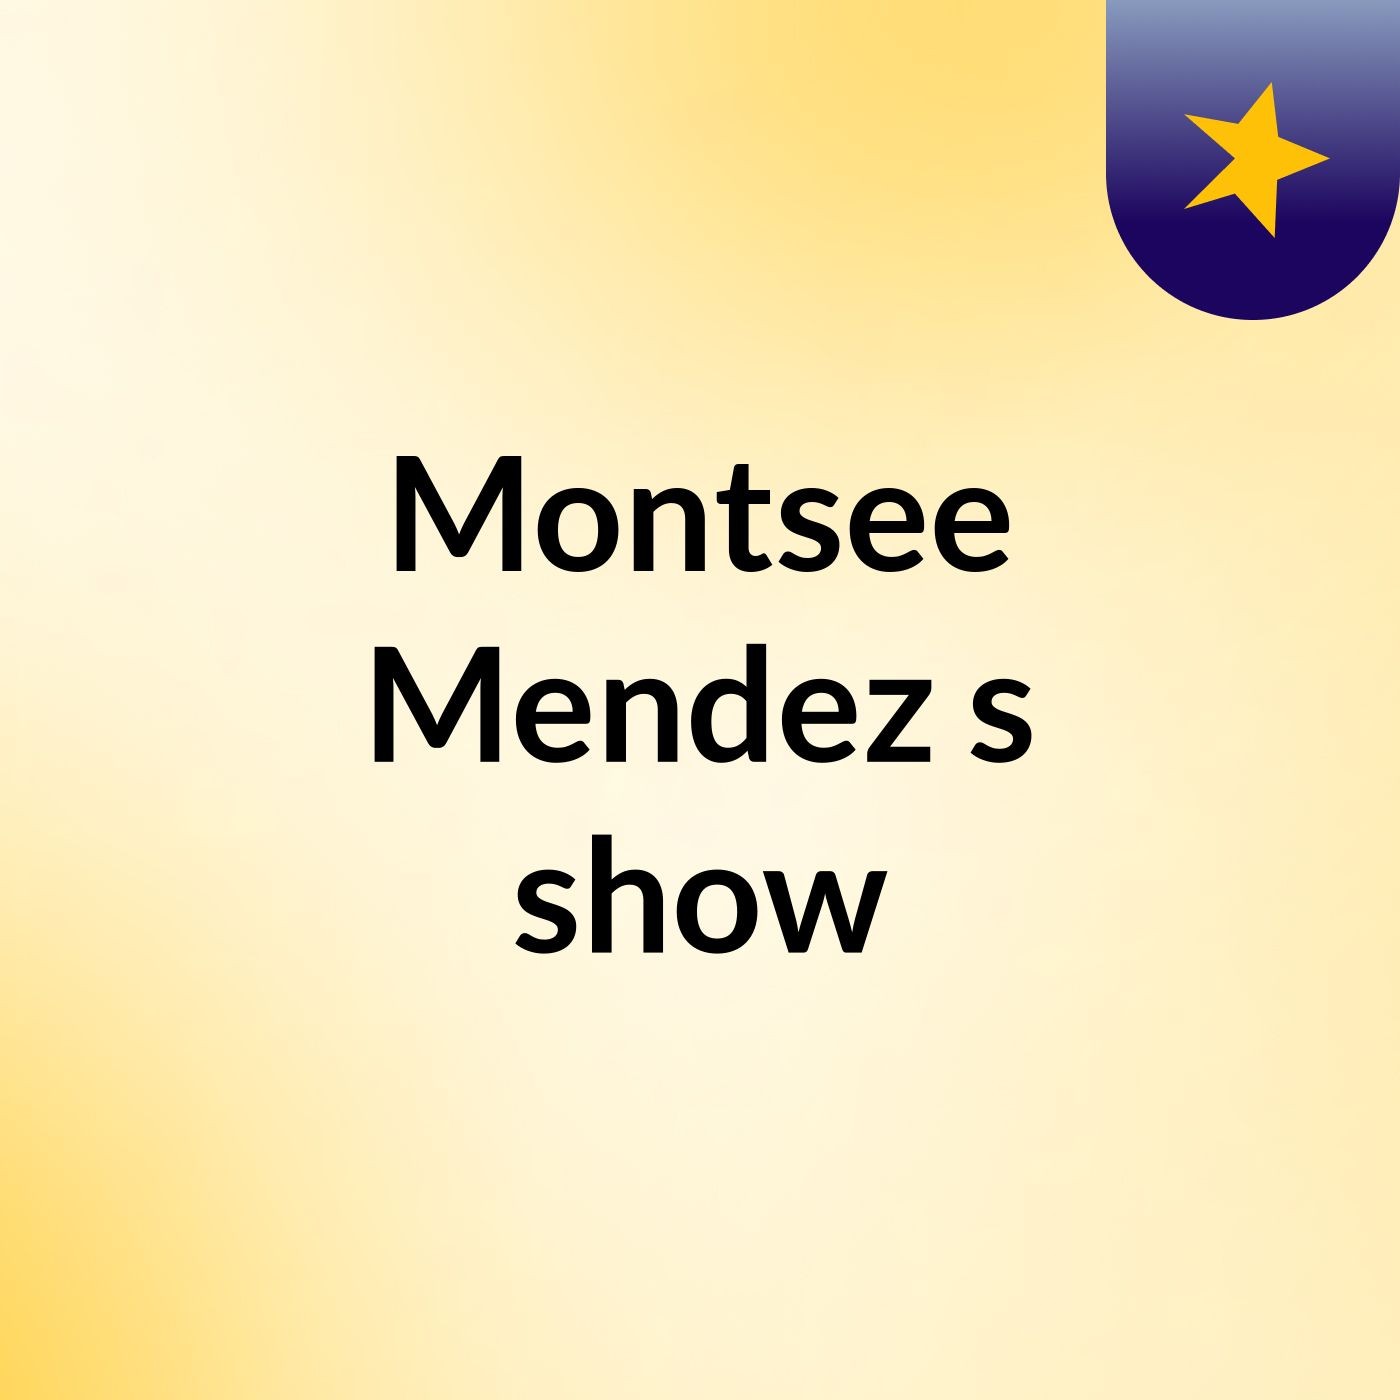 Montsee Mendez's show